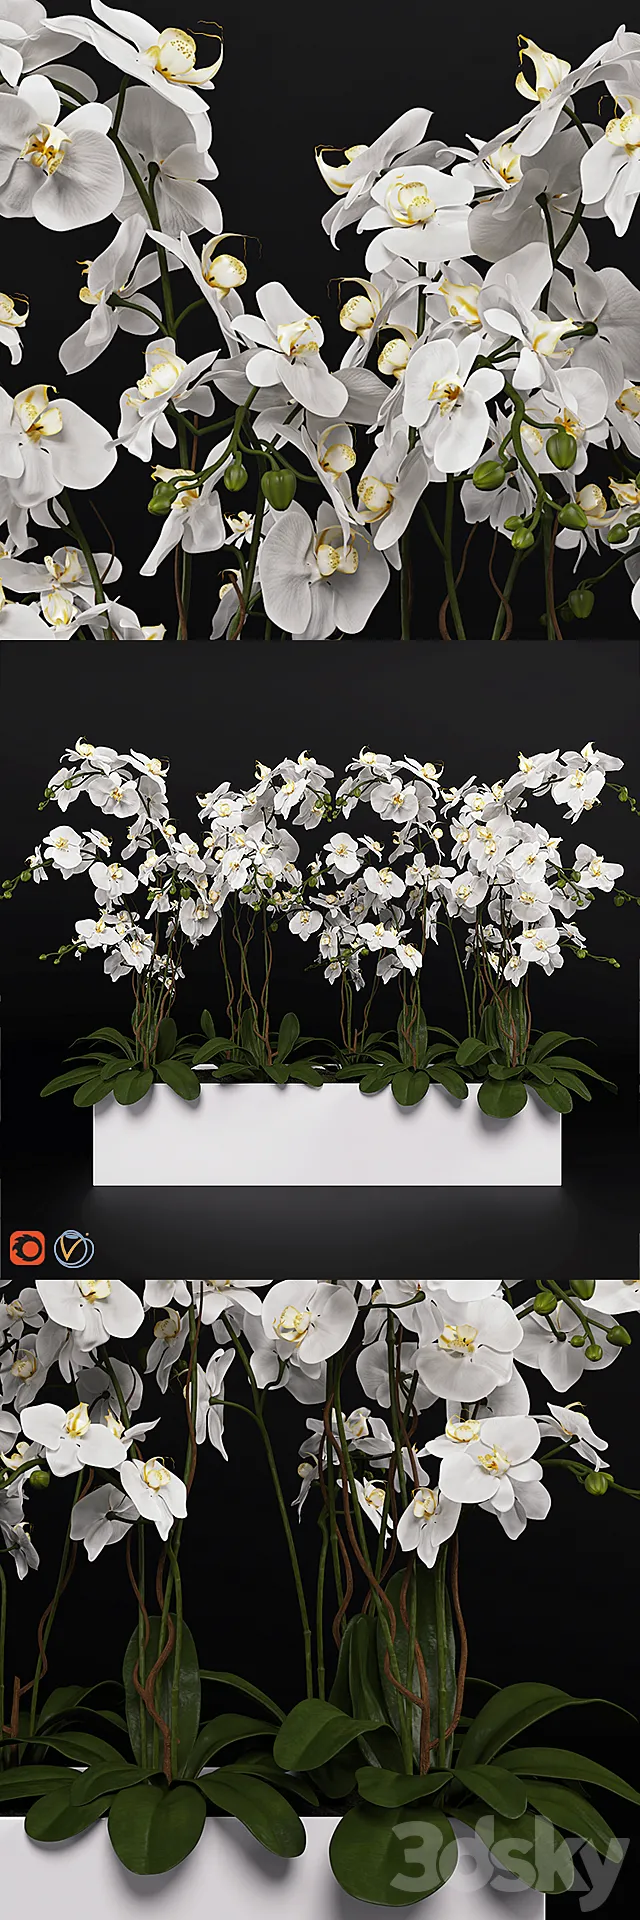 Orchid (phalaenopsis) bouquet 3 3DSMax File